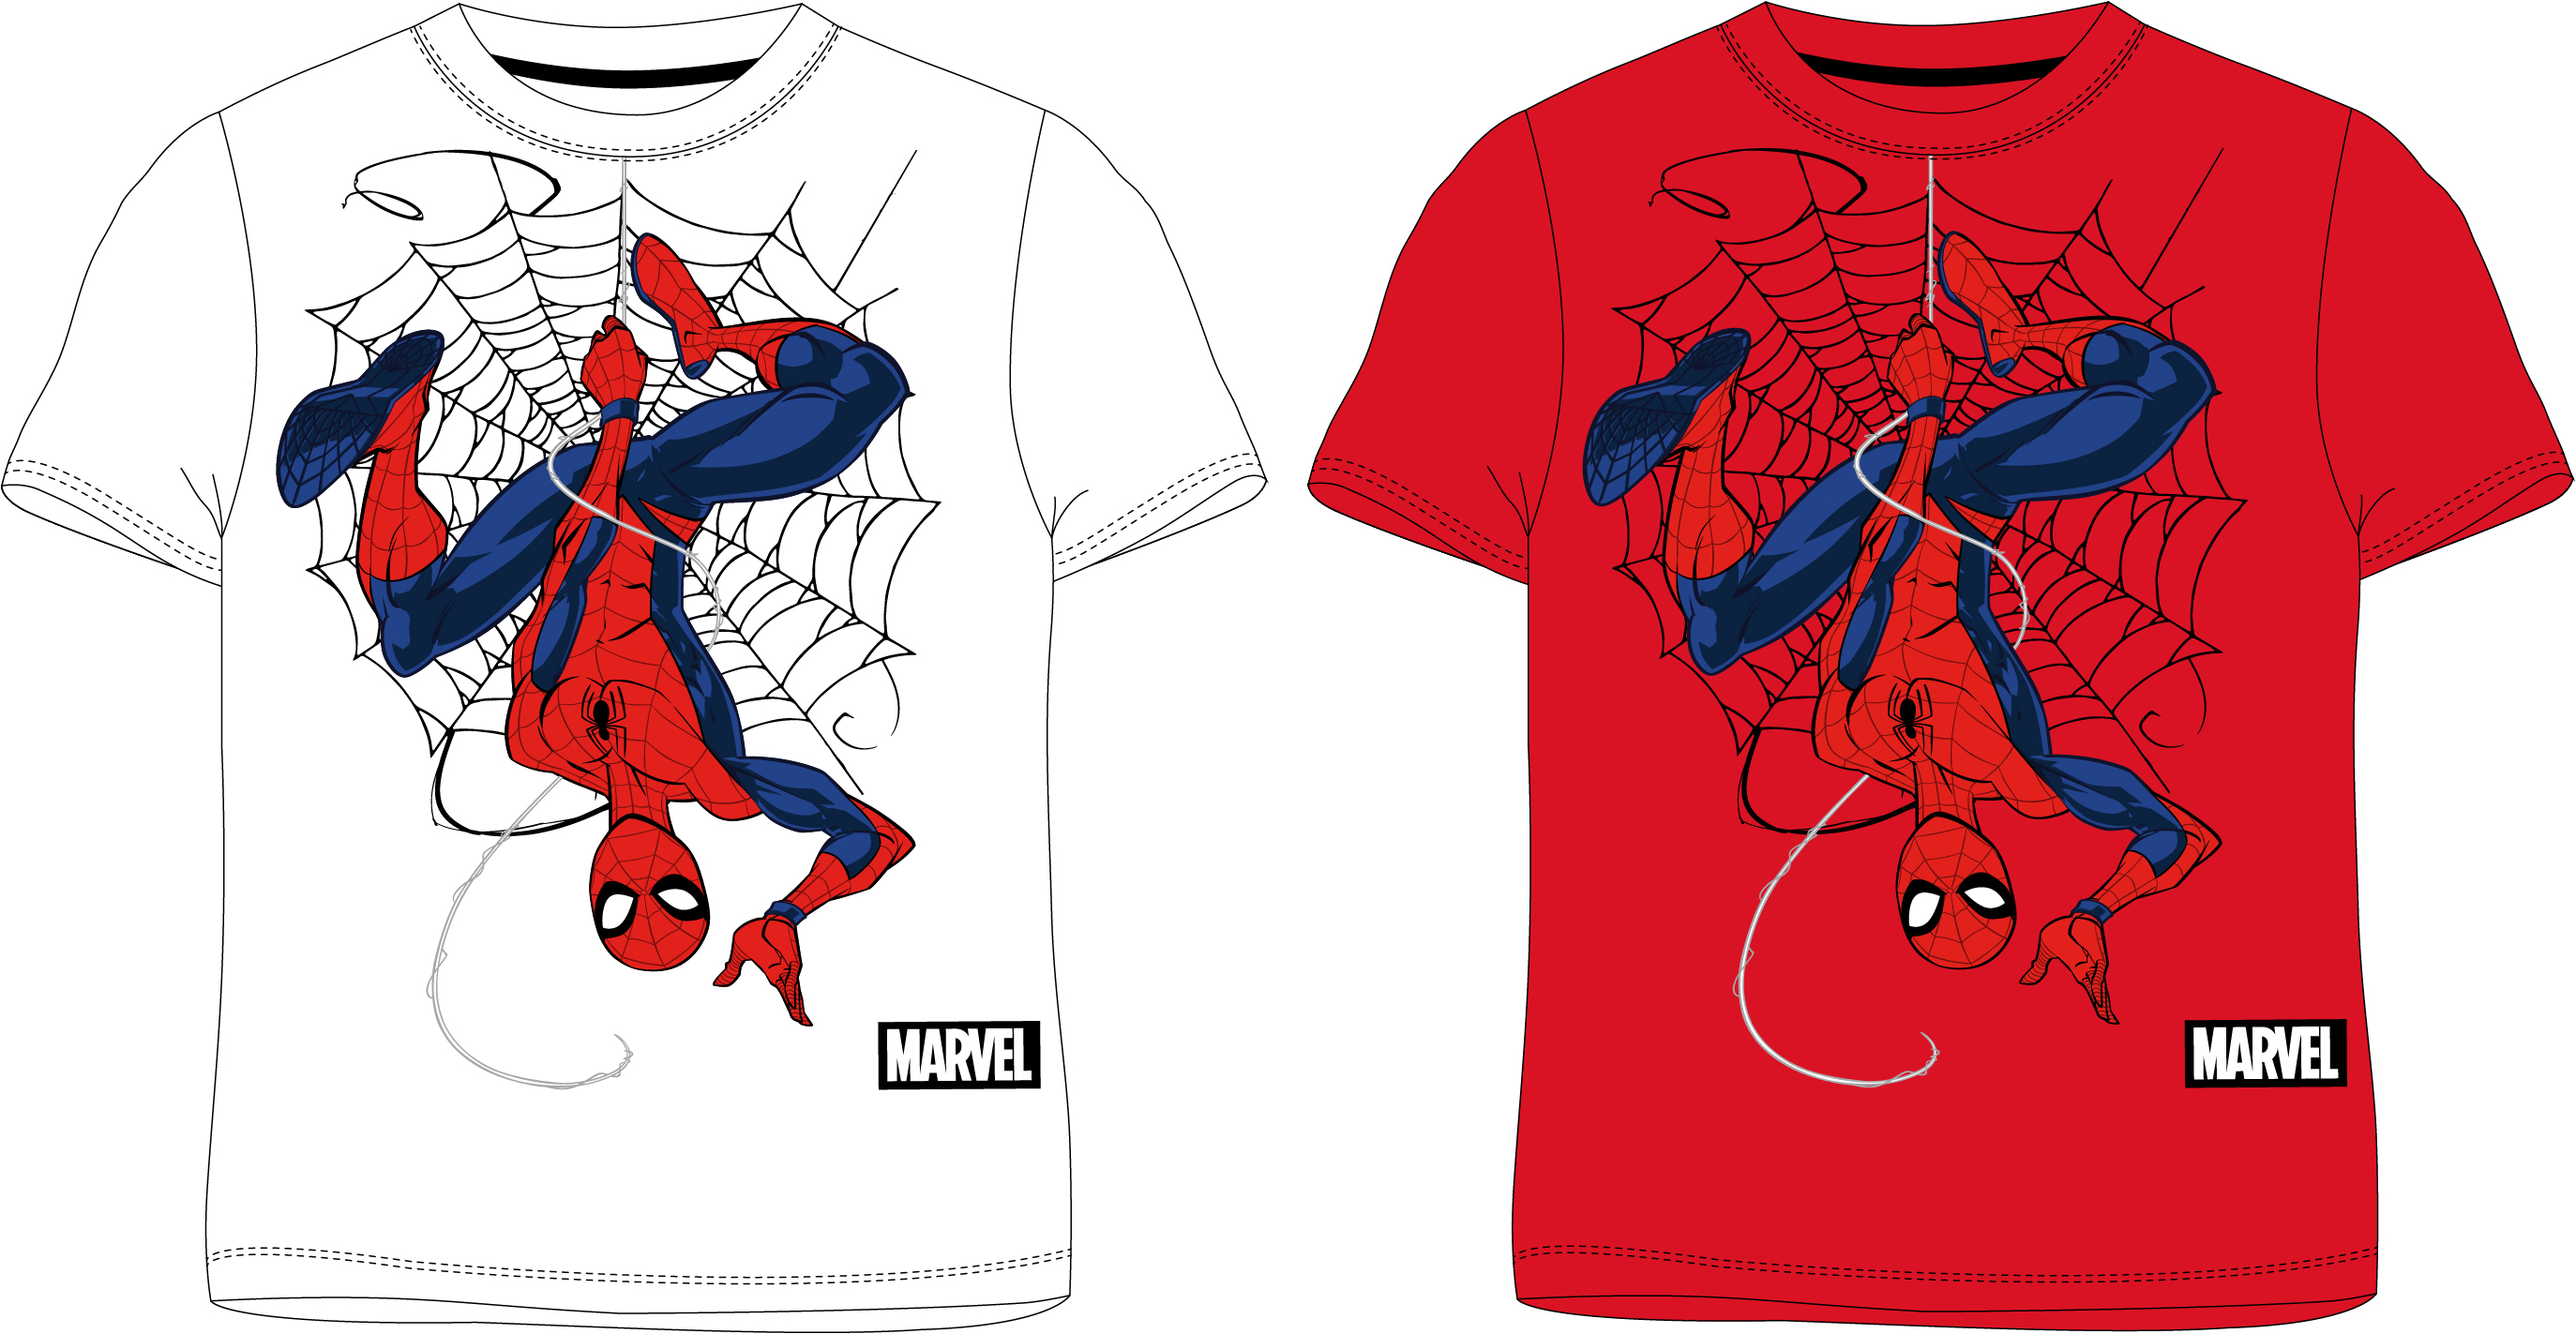 Spider Man - licence Chlapecké tričko - Spider-Man 52021309, červená Barva: Červená, Velikost: 134